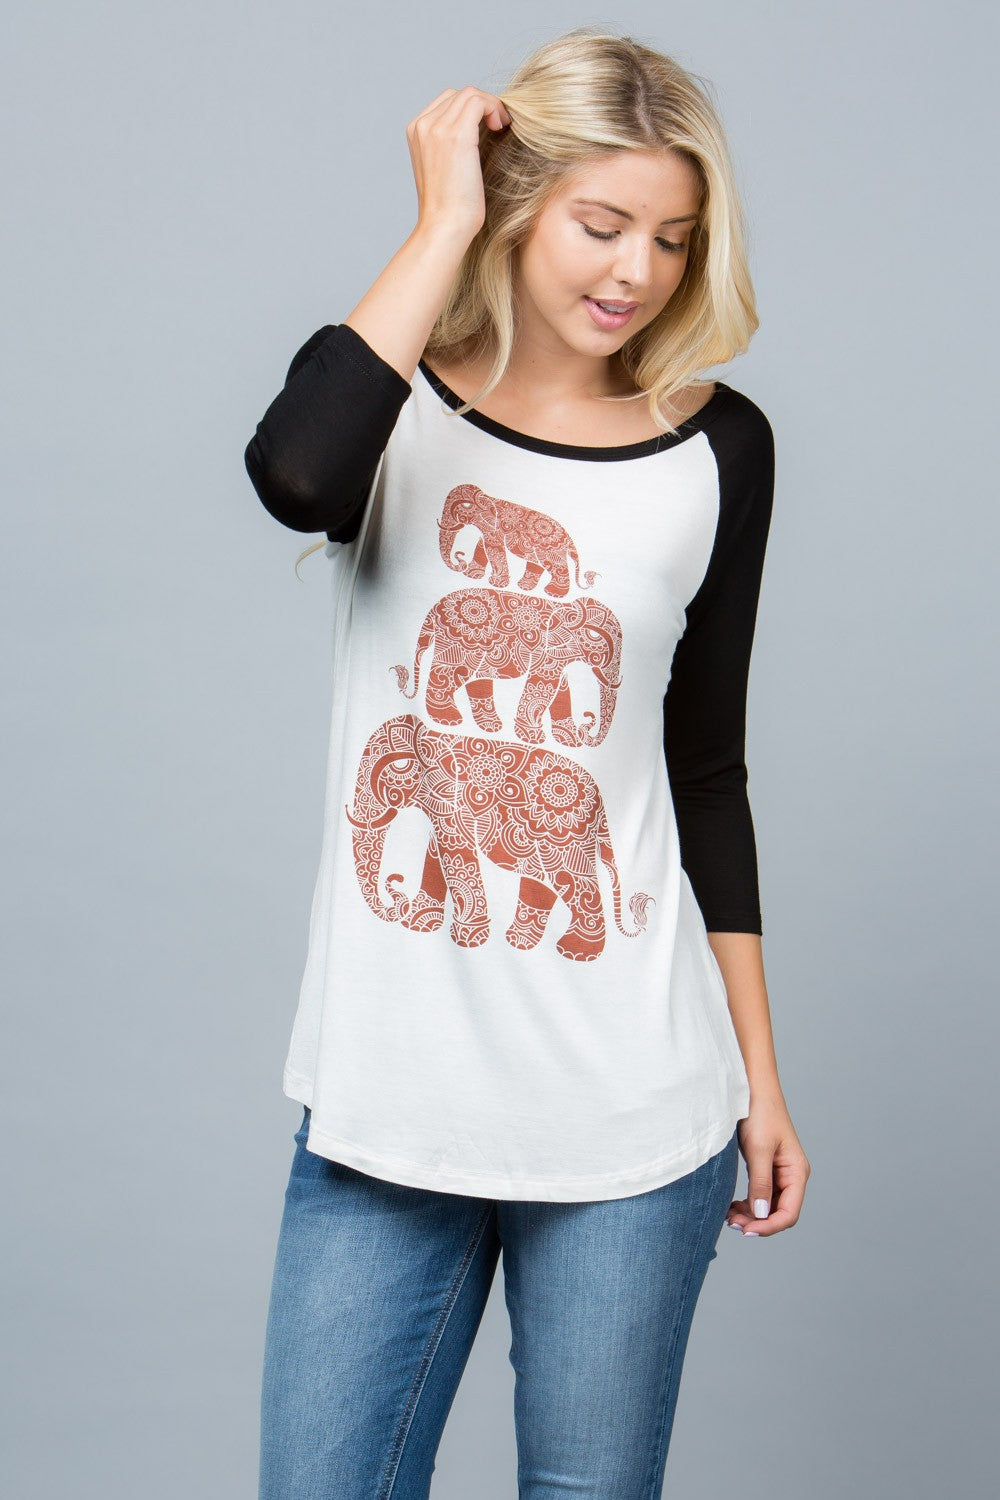 Three Elephants Raglan Shirt